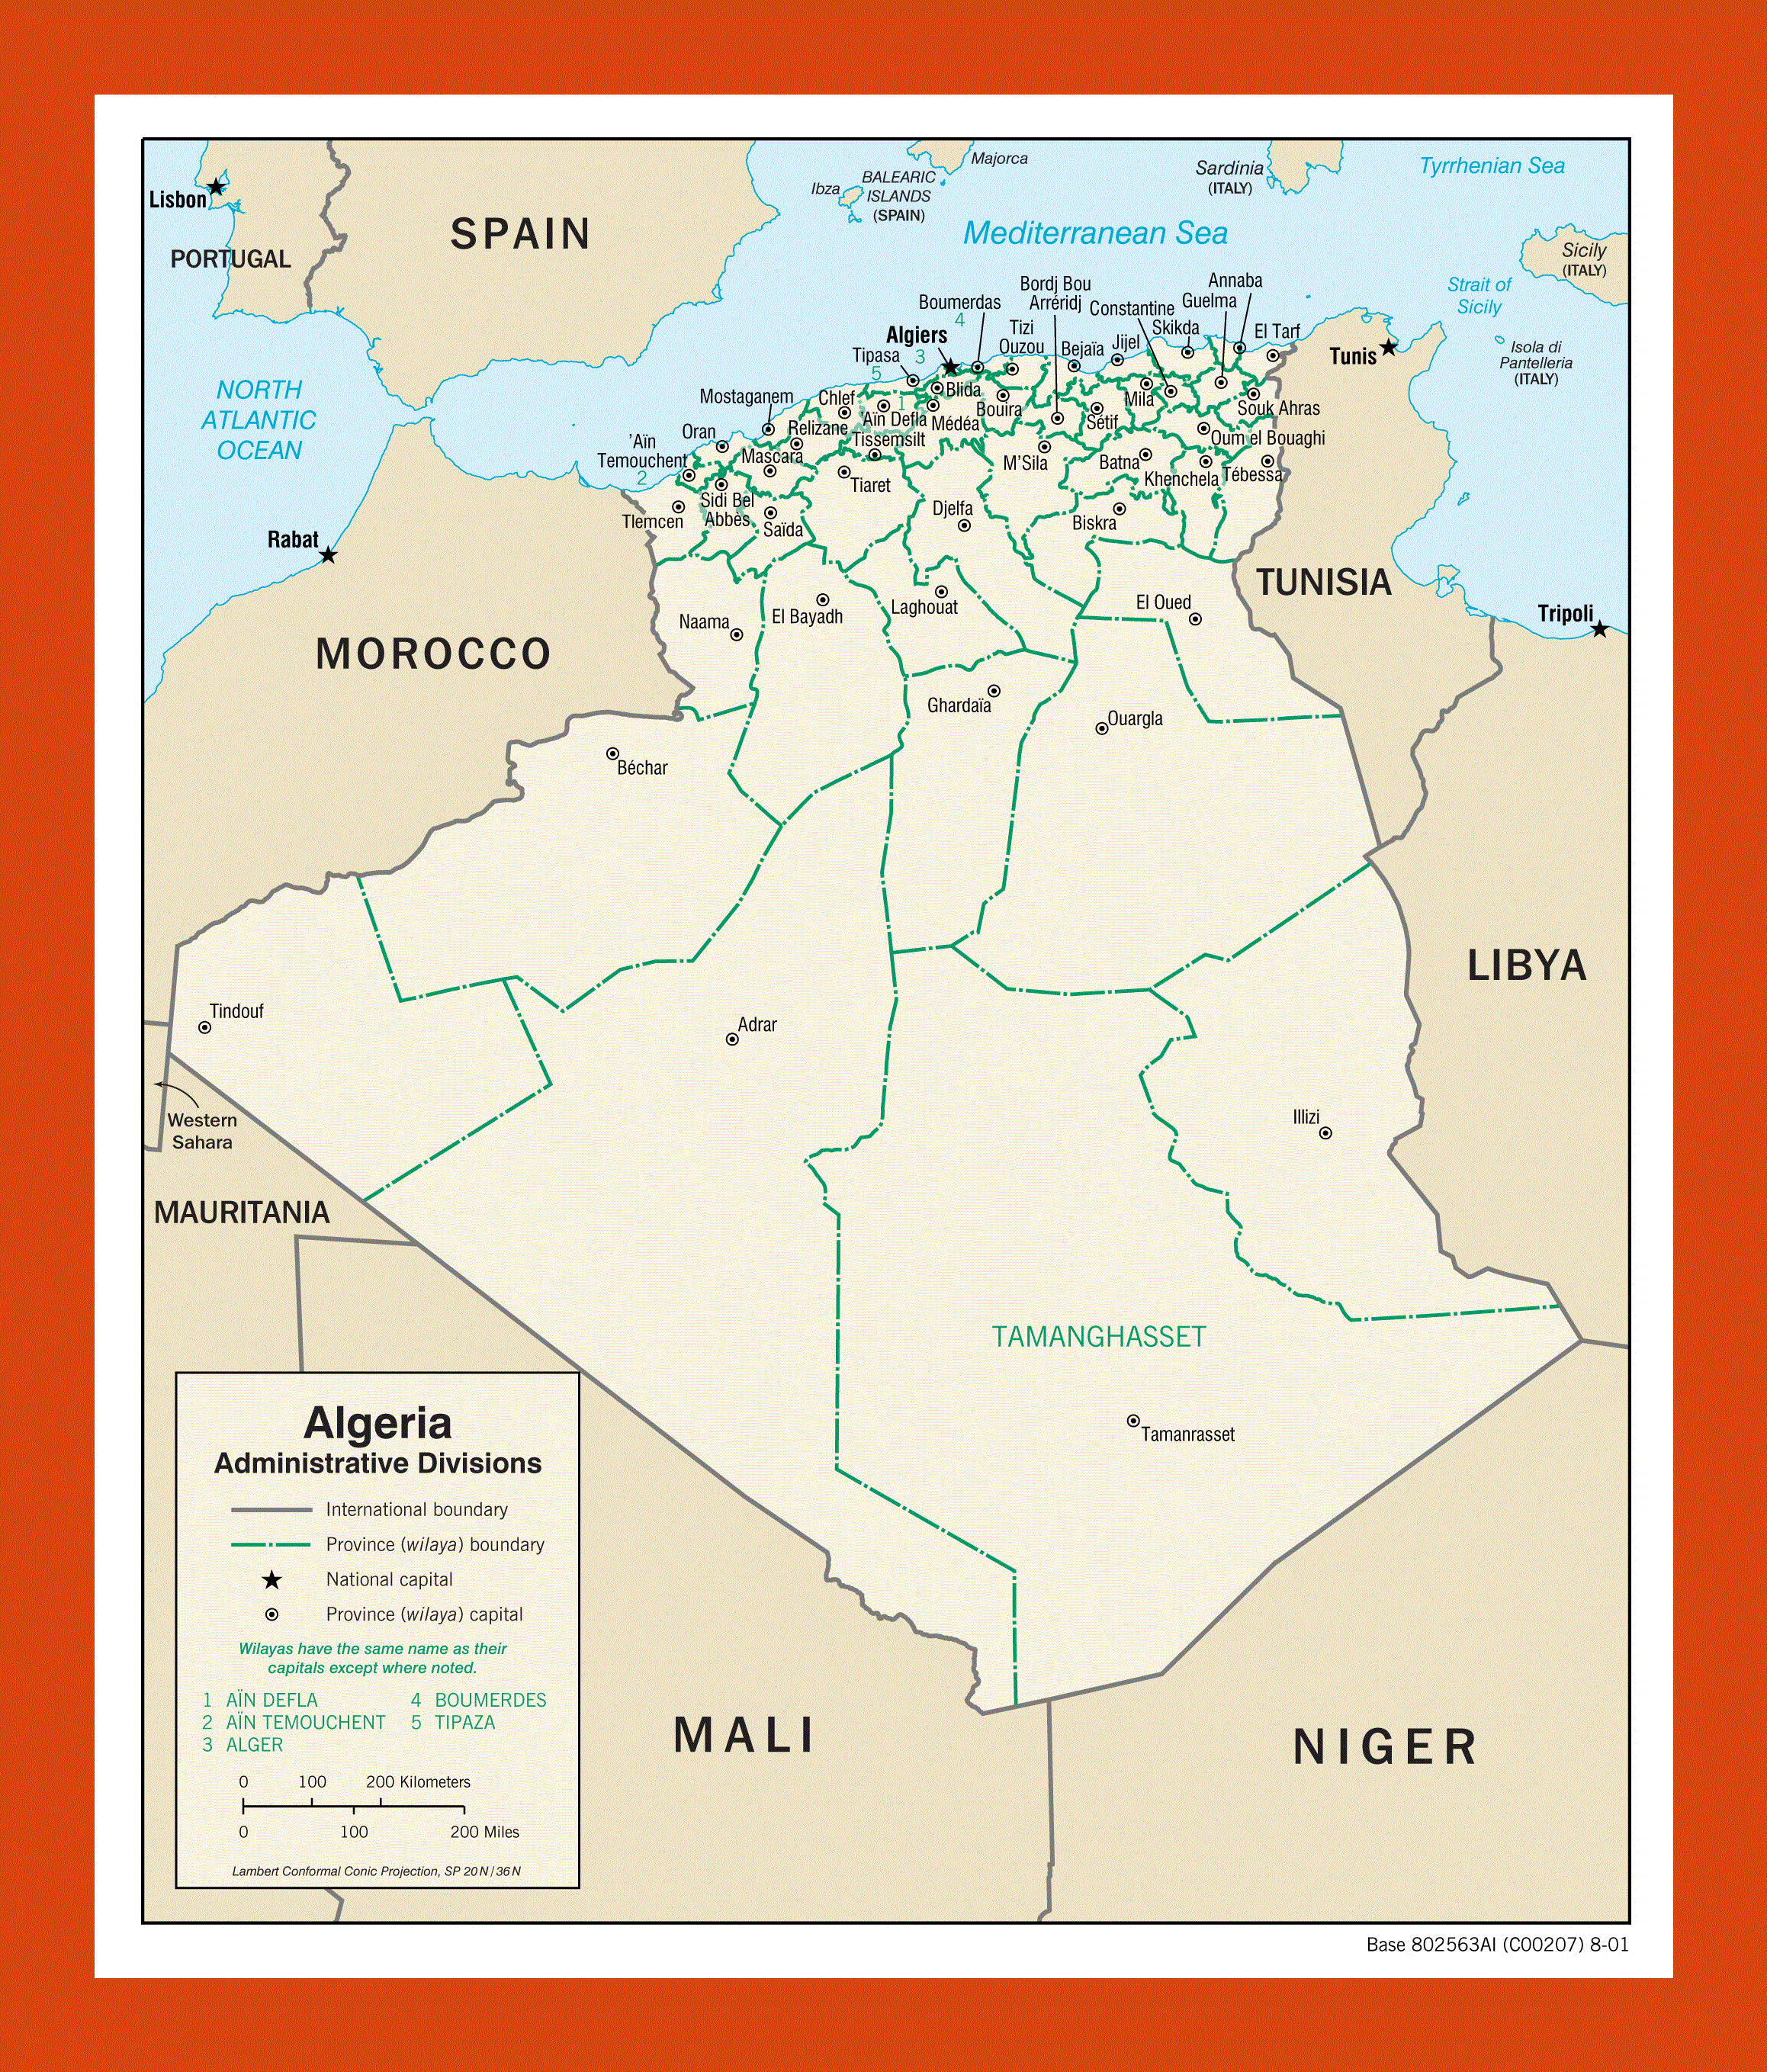 Administrative divisions map of Algeria - 2001 | Maps of Algeria | Maps ...